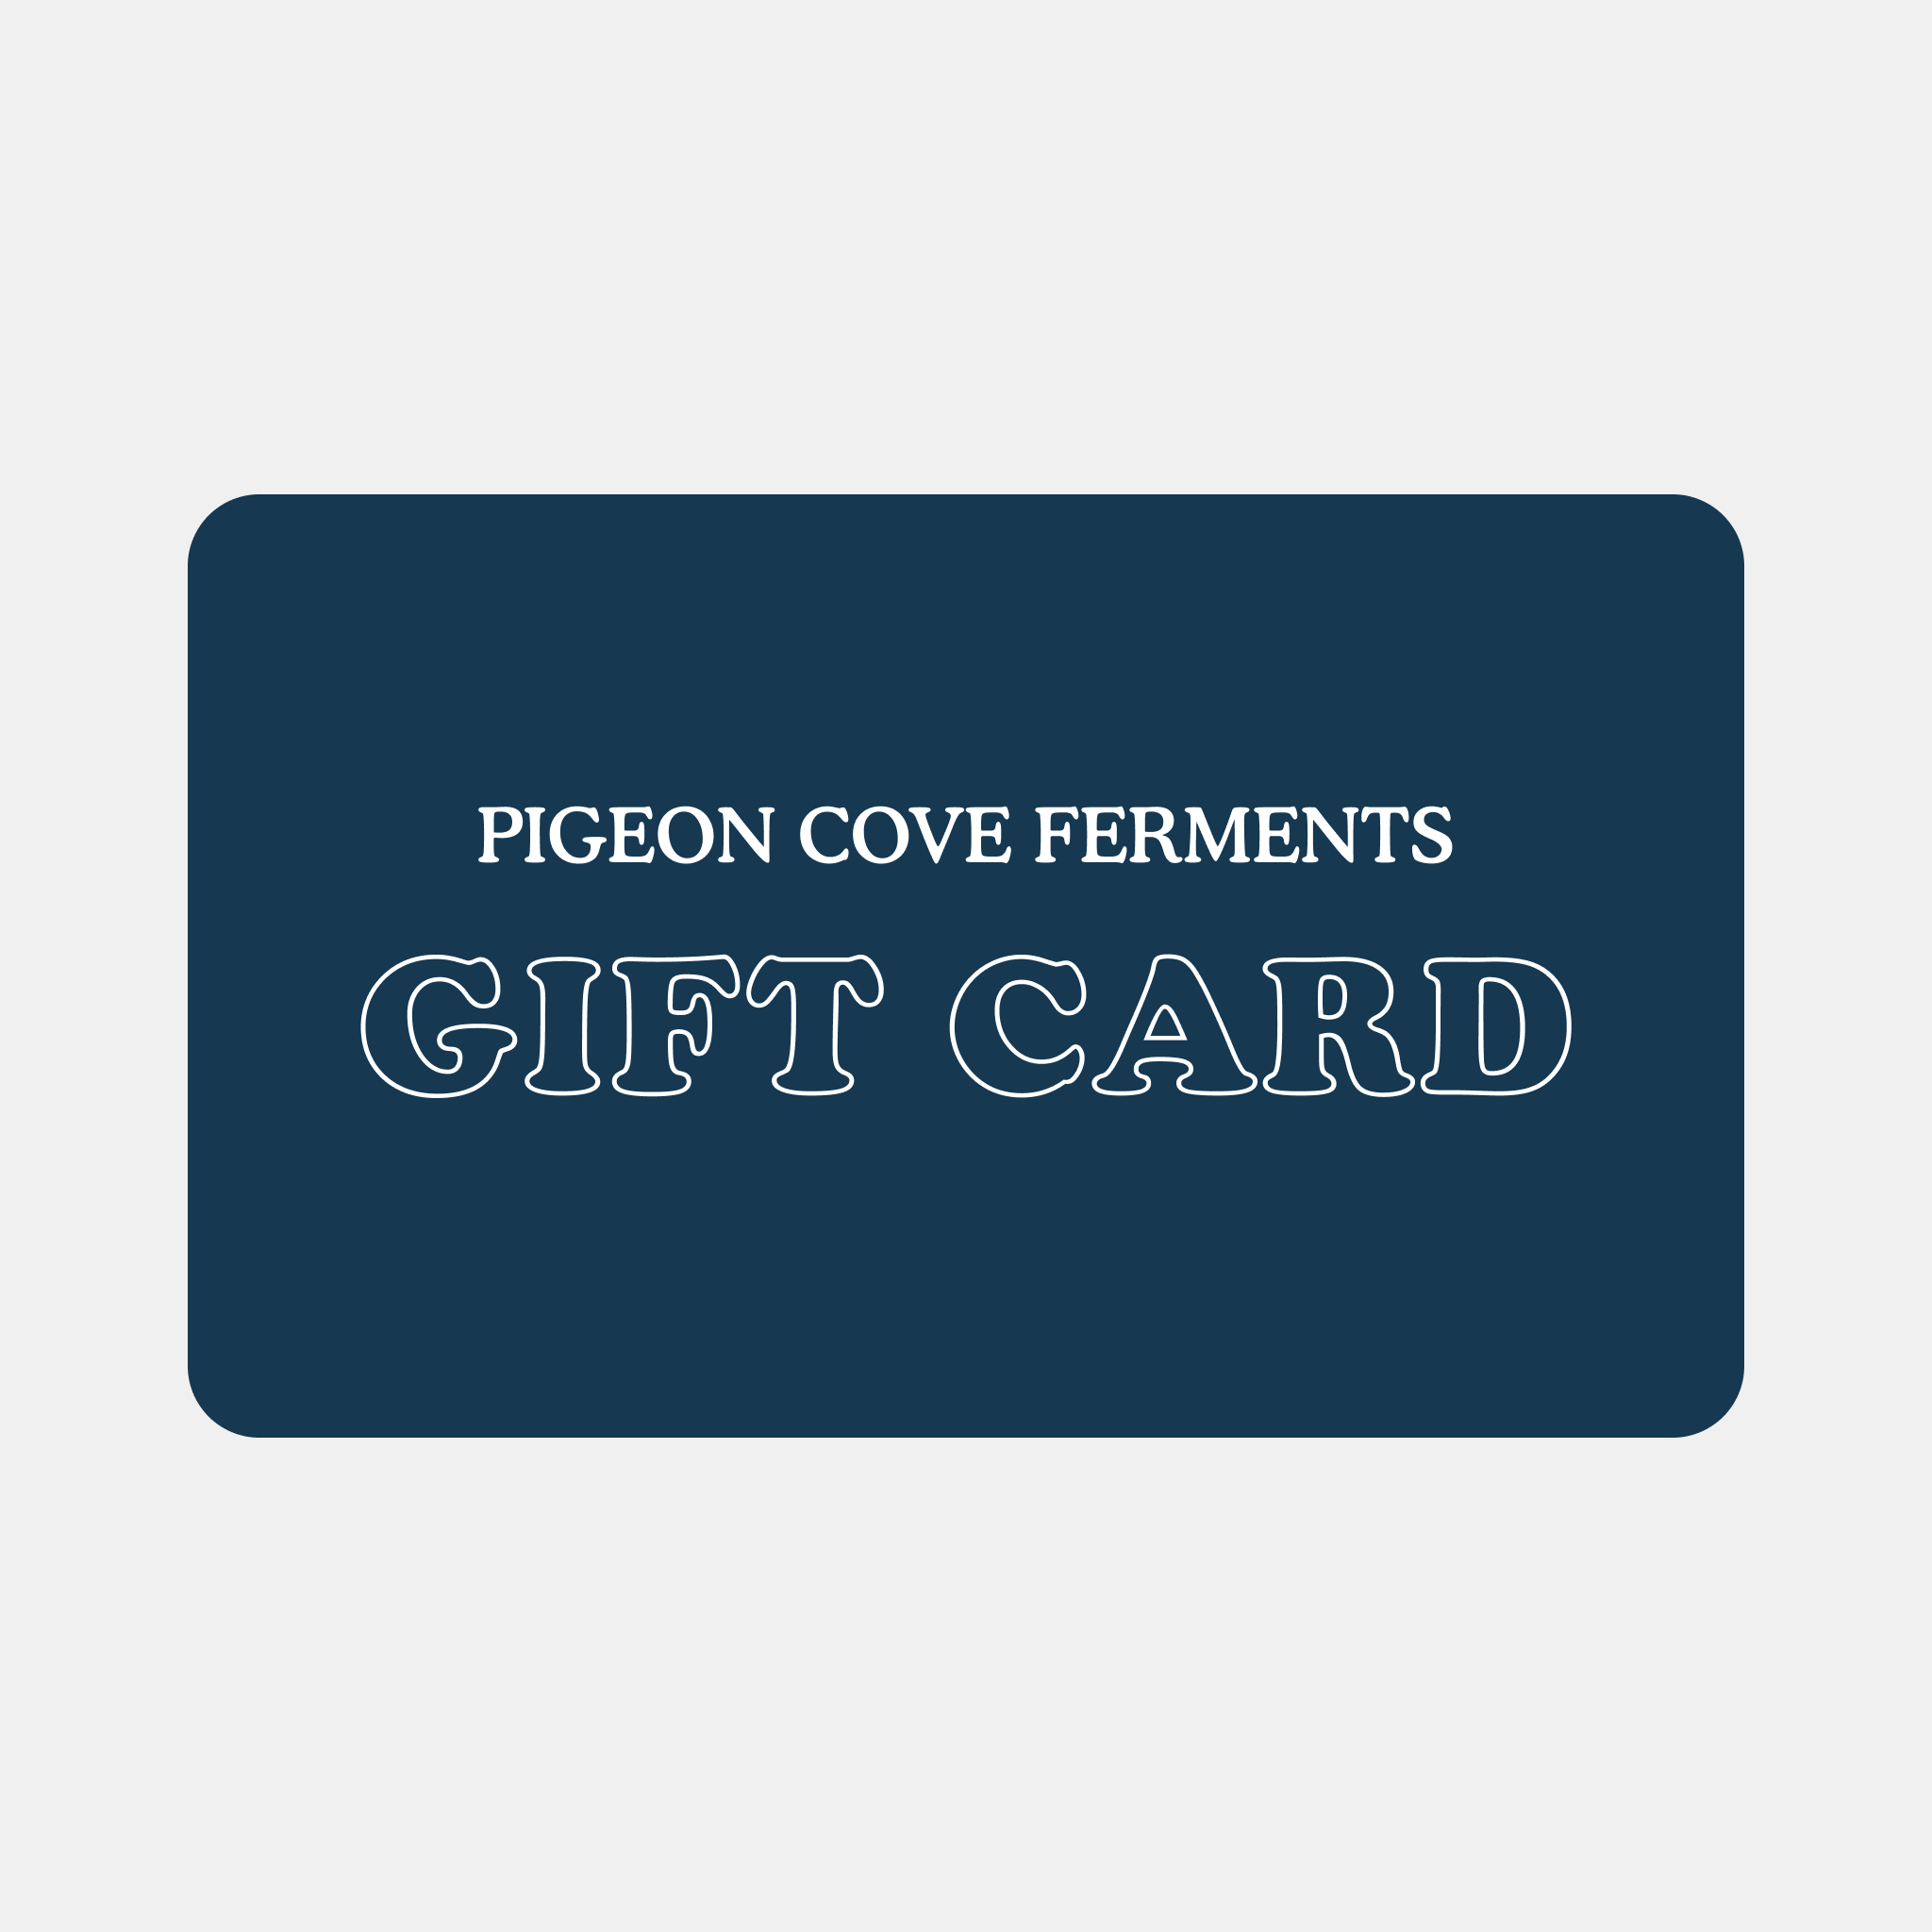 Pigeon Cove Ferments Gift Card